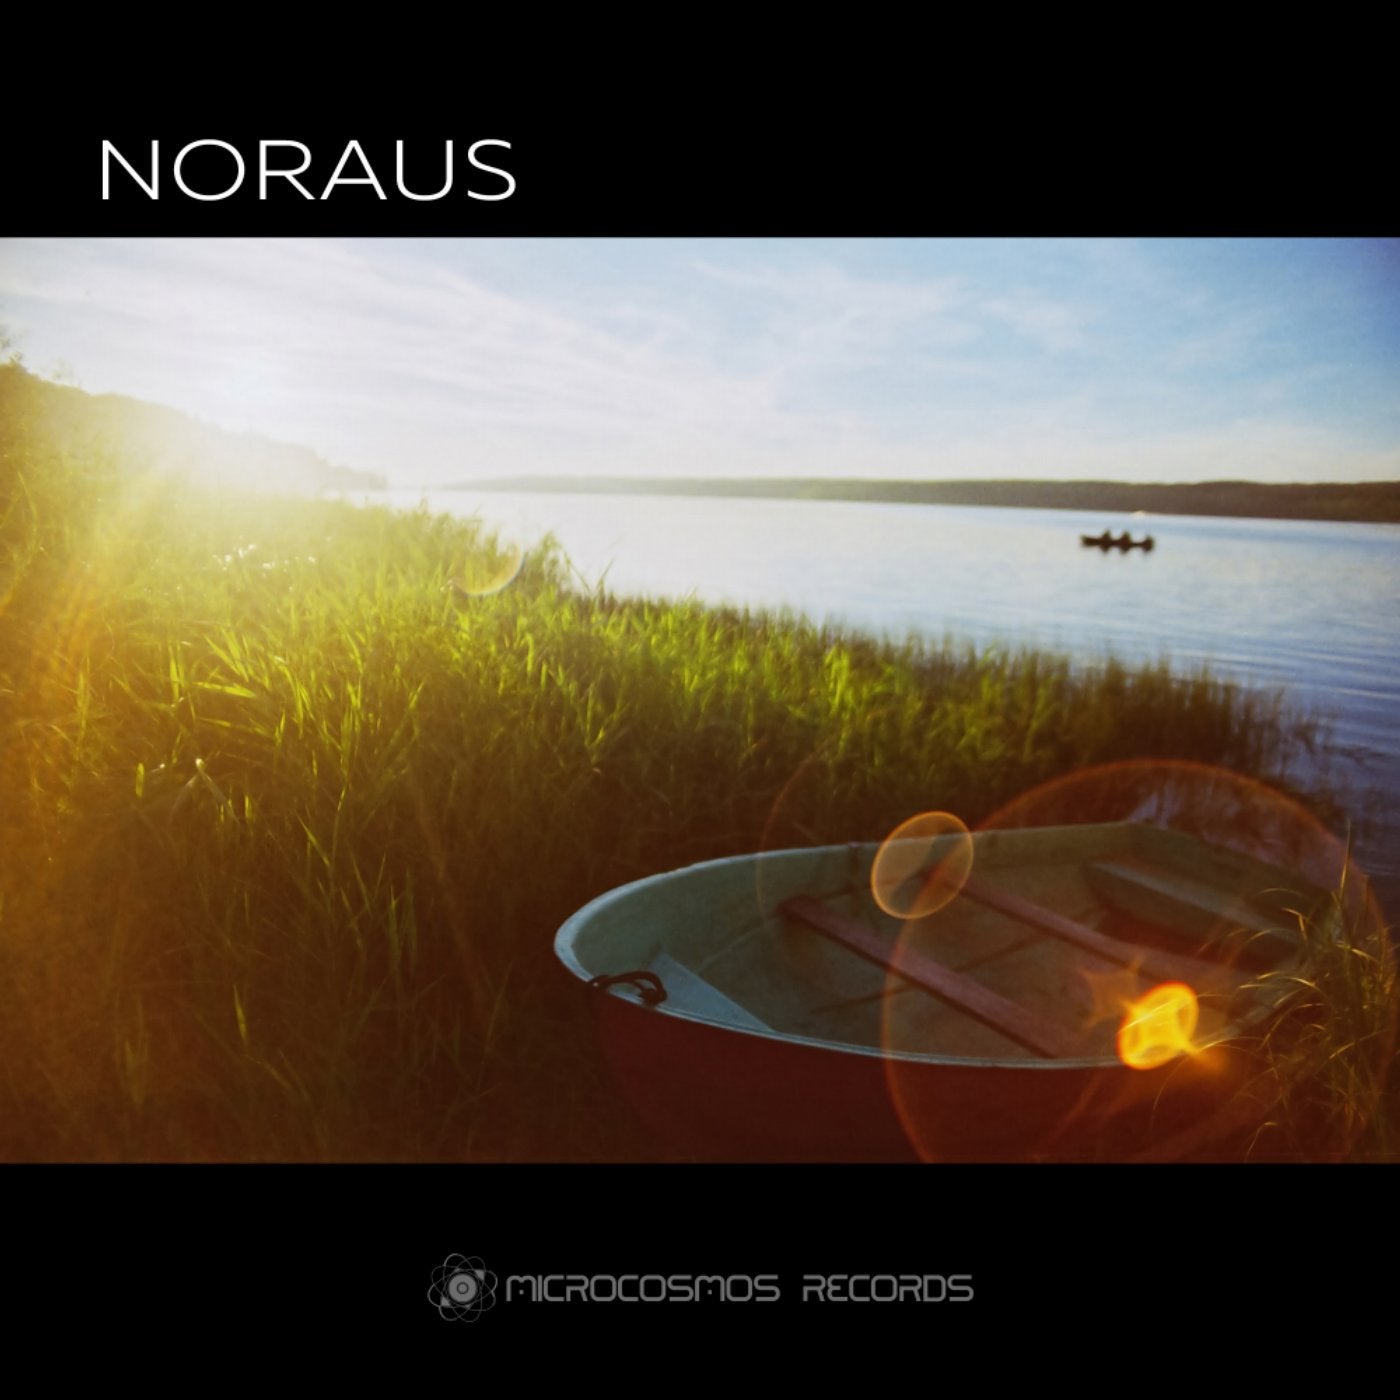 Noraus music download - Beatport